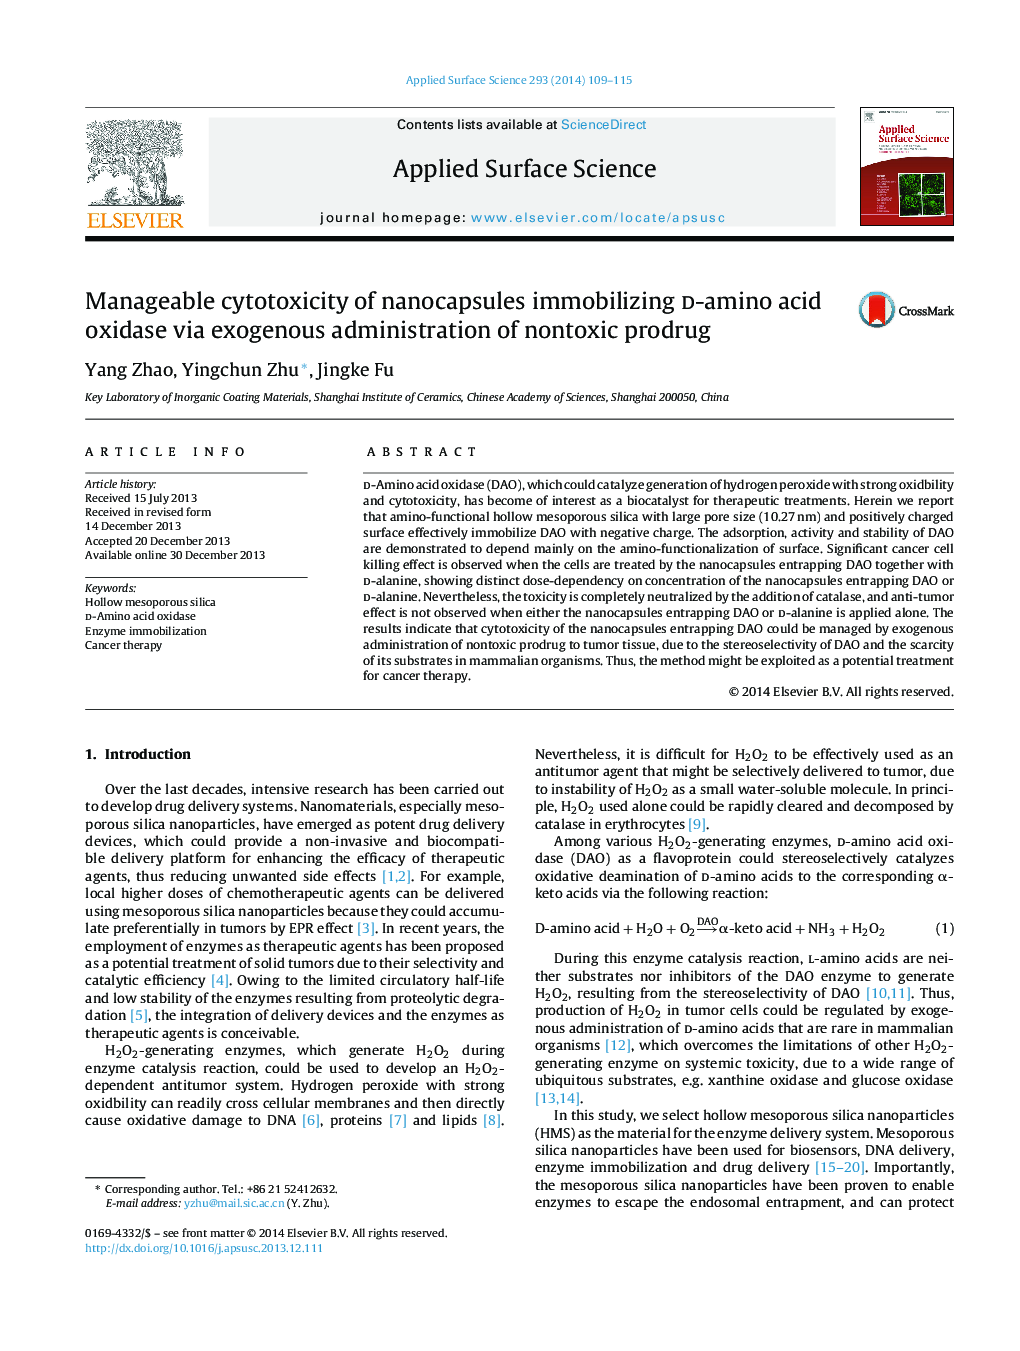 Manageable cytotoxicity of nanocapsules immobilizing d-amino acid oxidase via exogenous administration of nontoxic prodrug